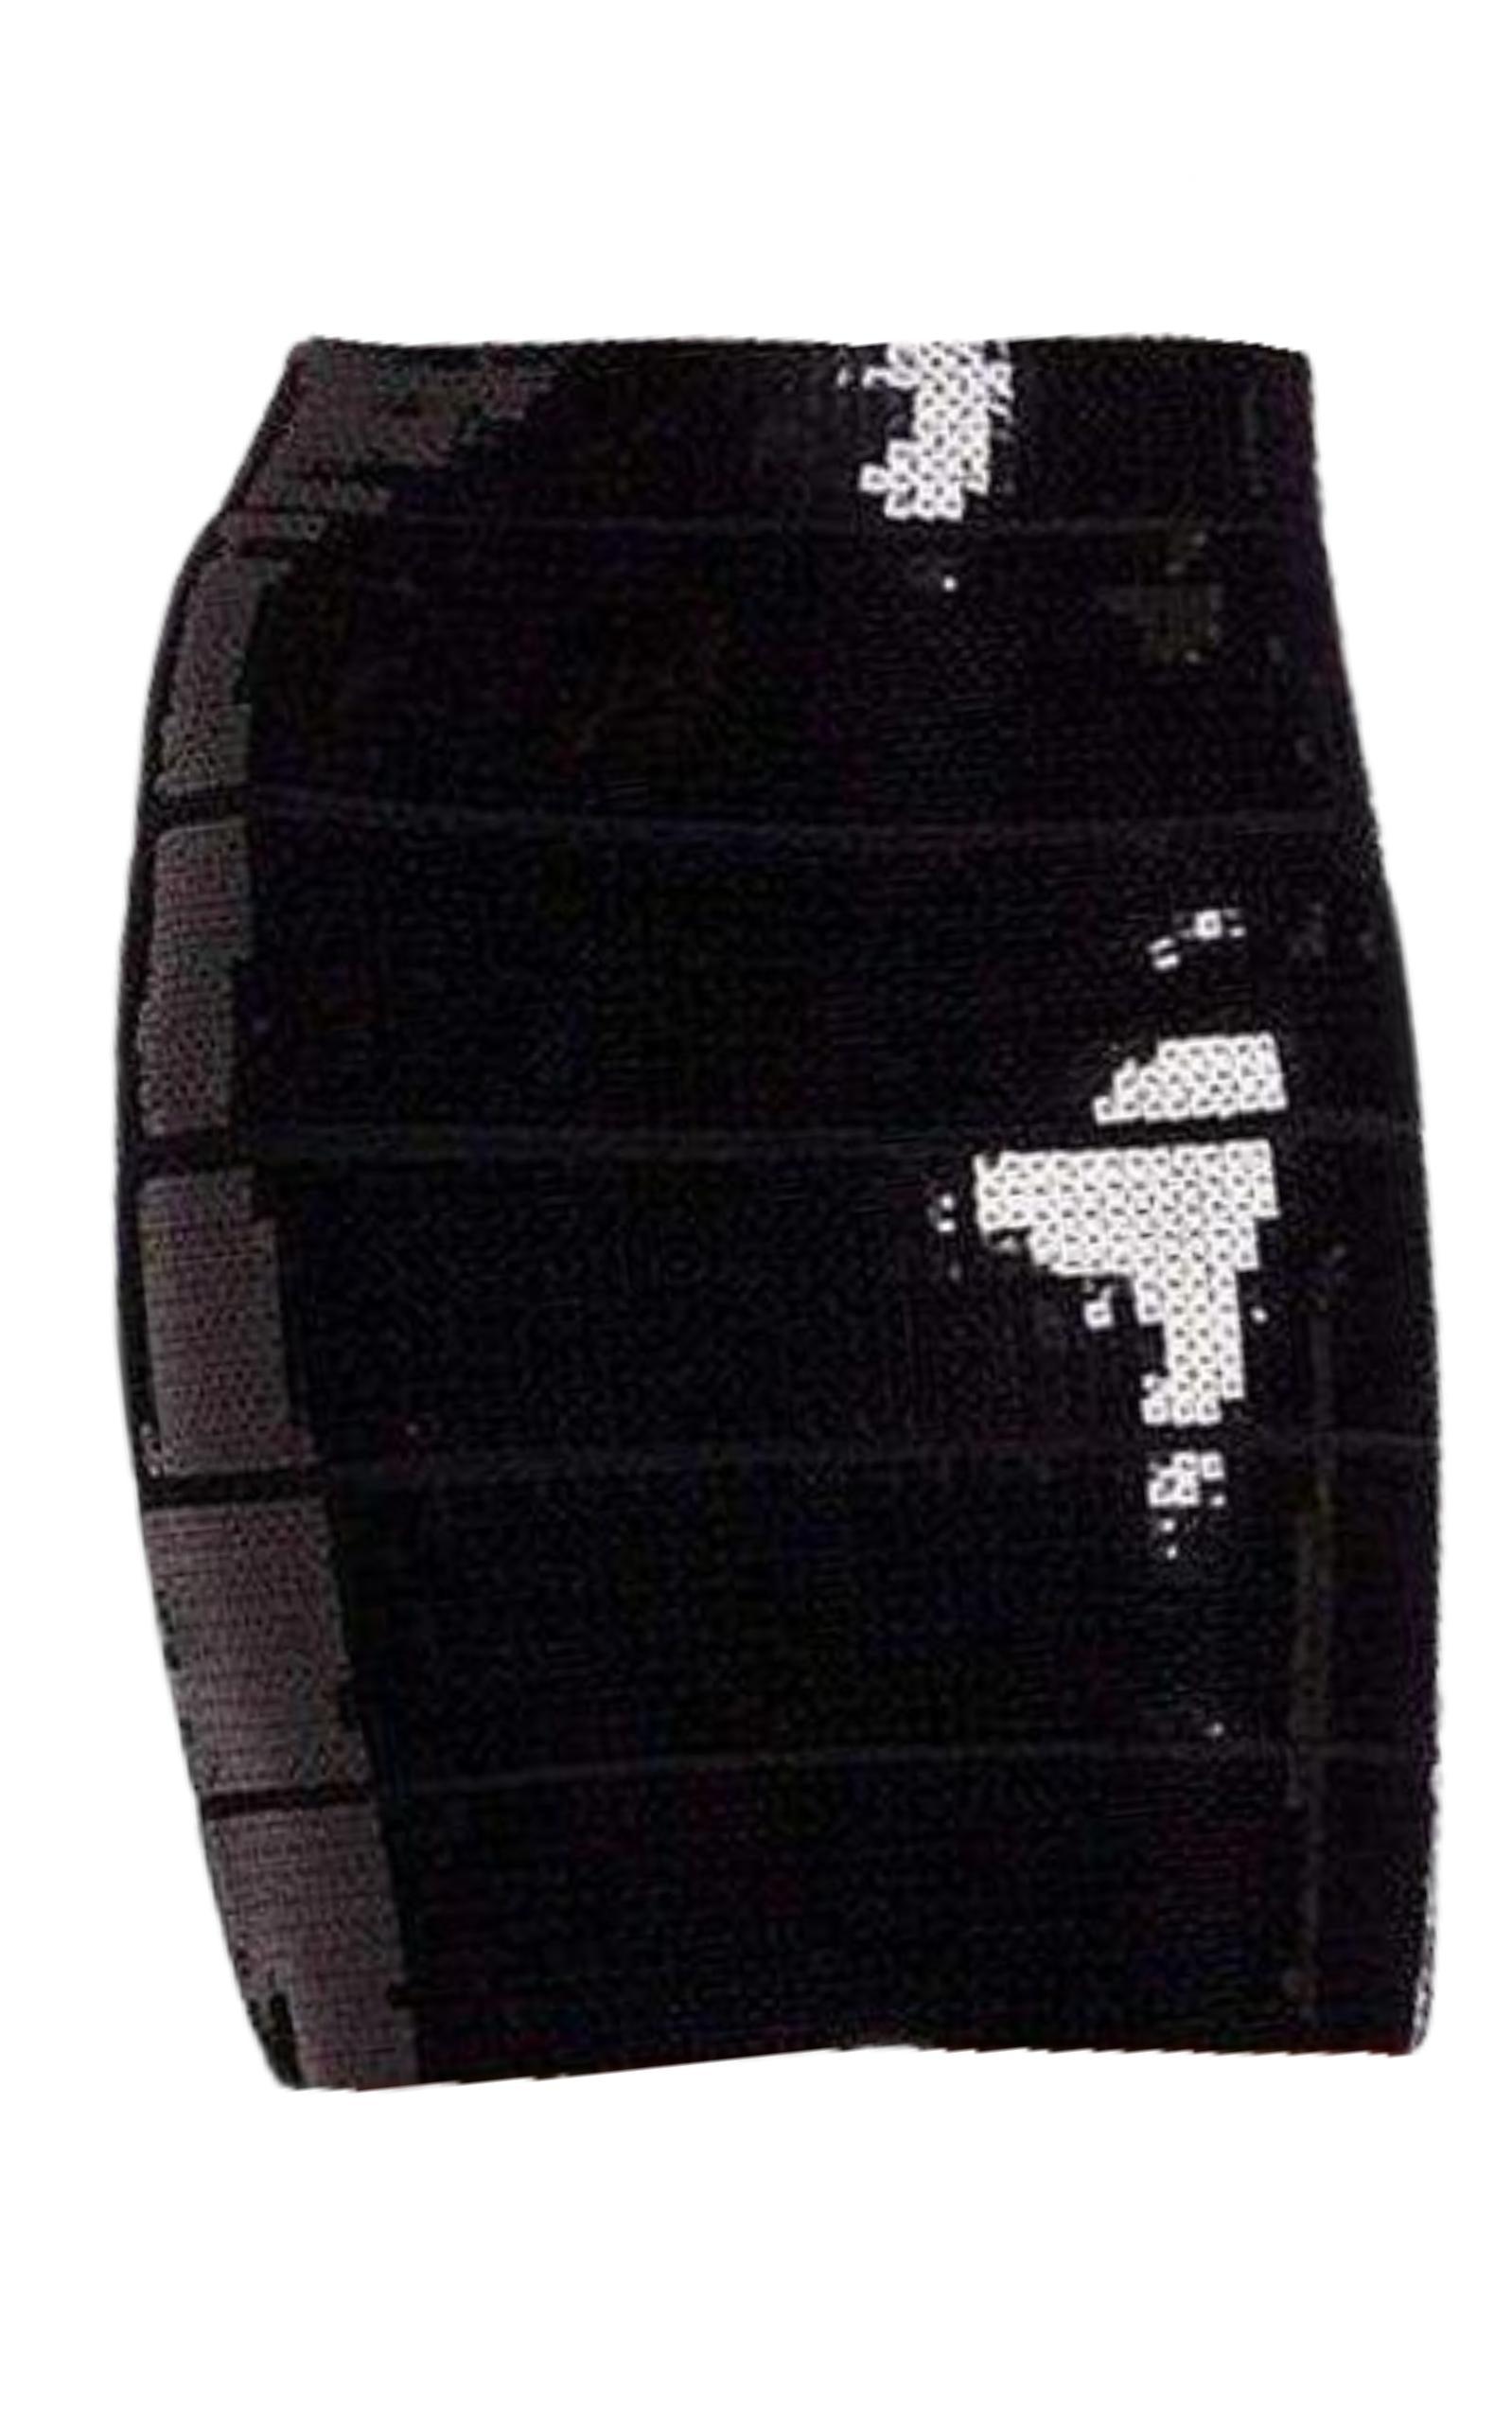  BCBGMAXAZRIASequin Pencil Power Skirt - Runway Catalog